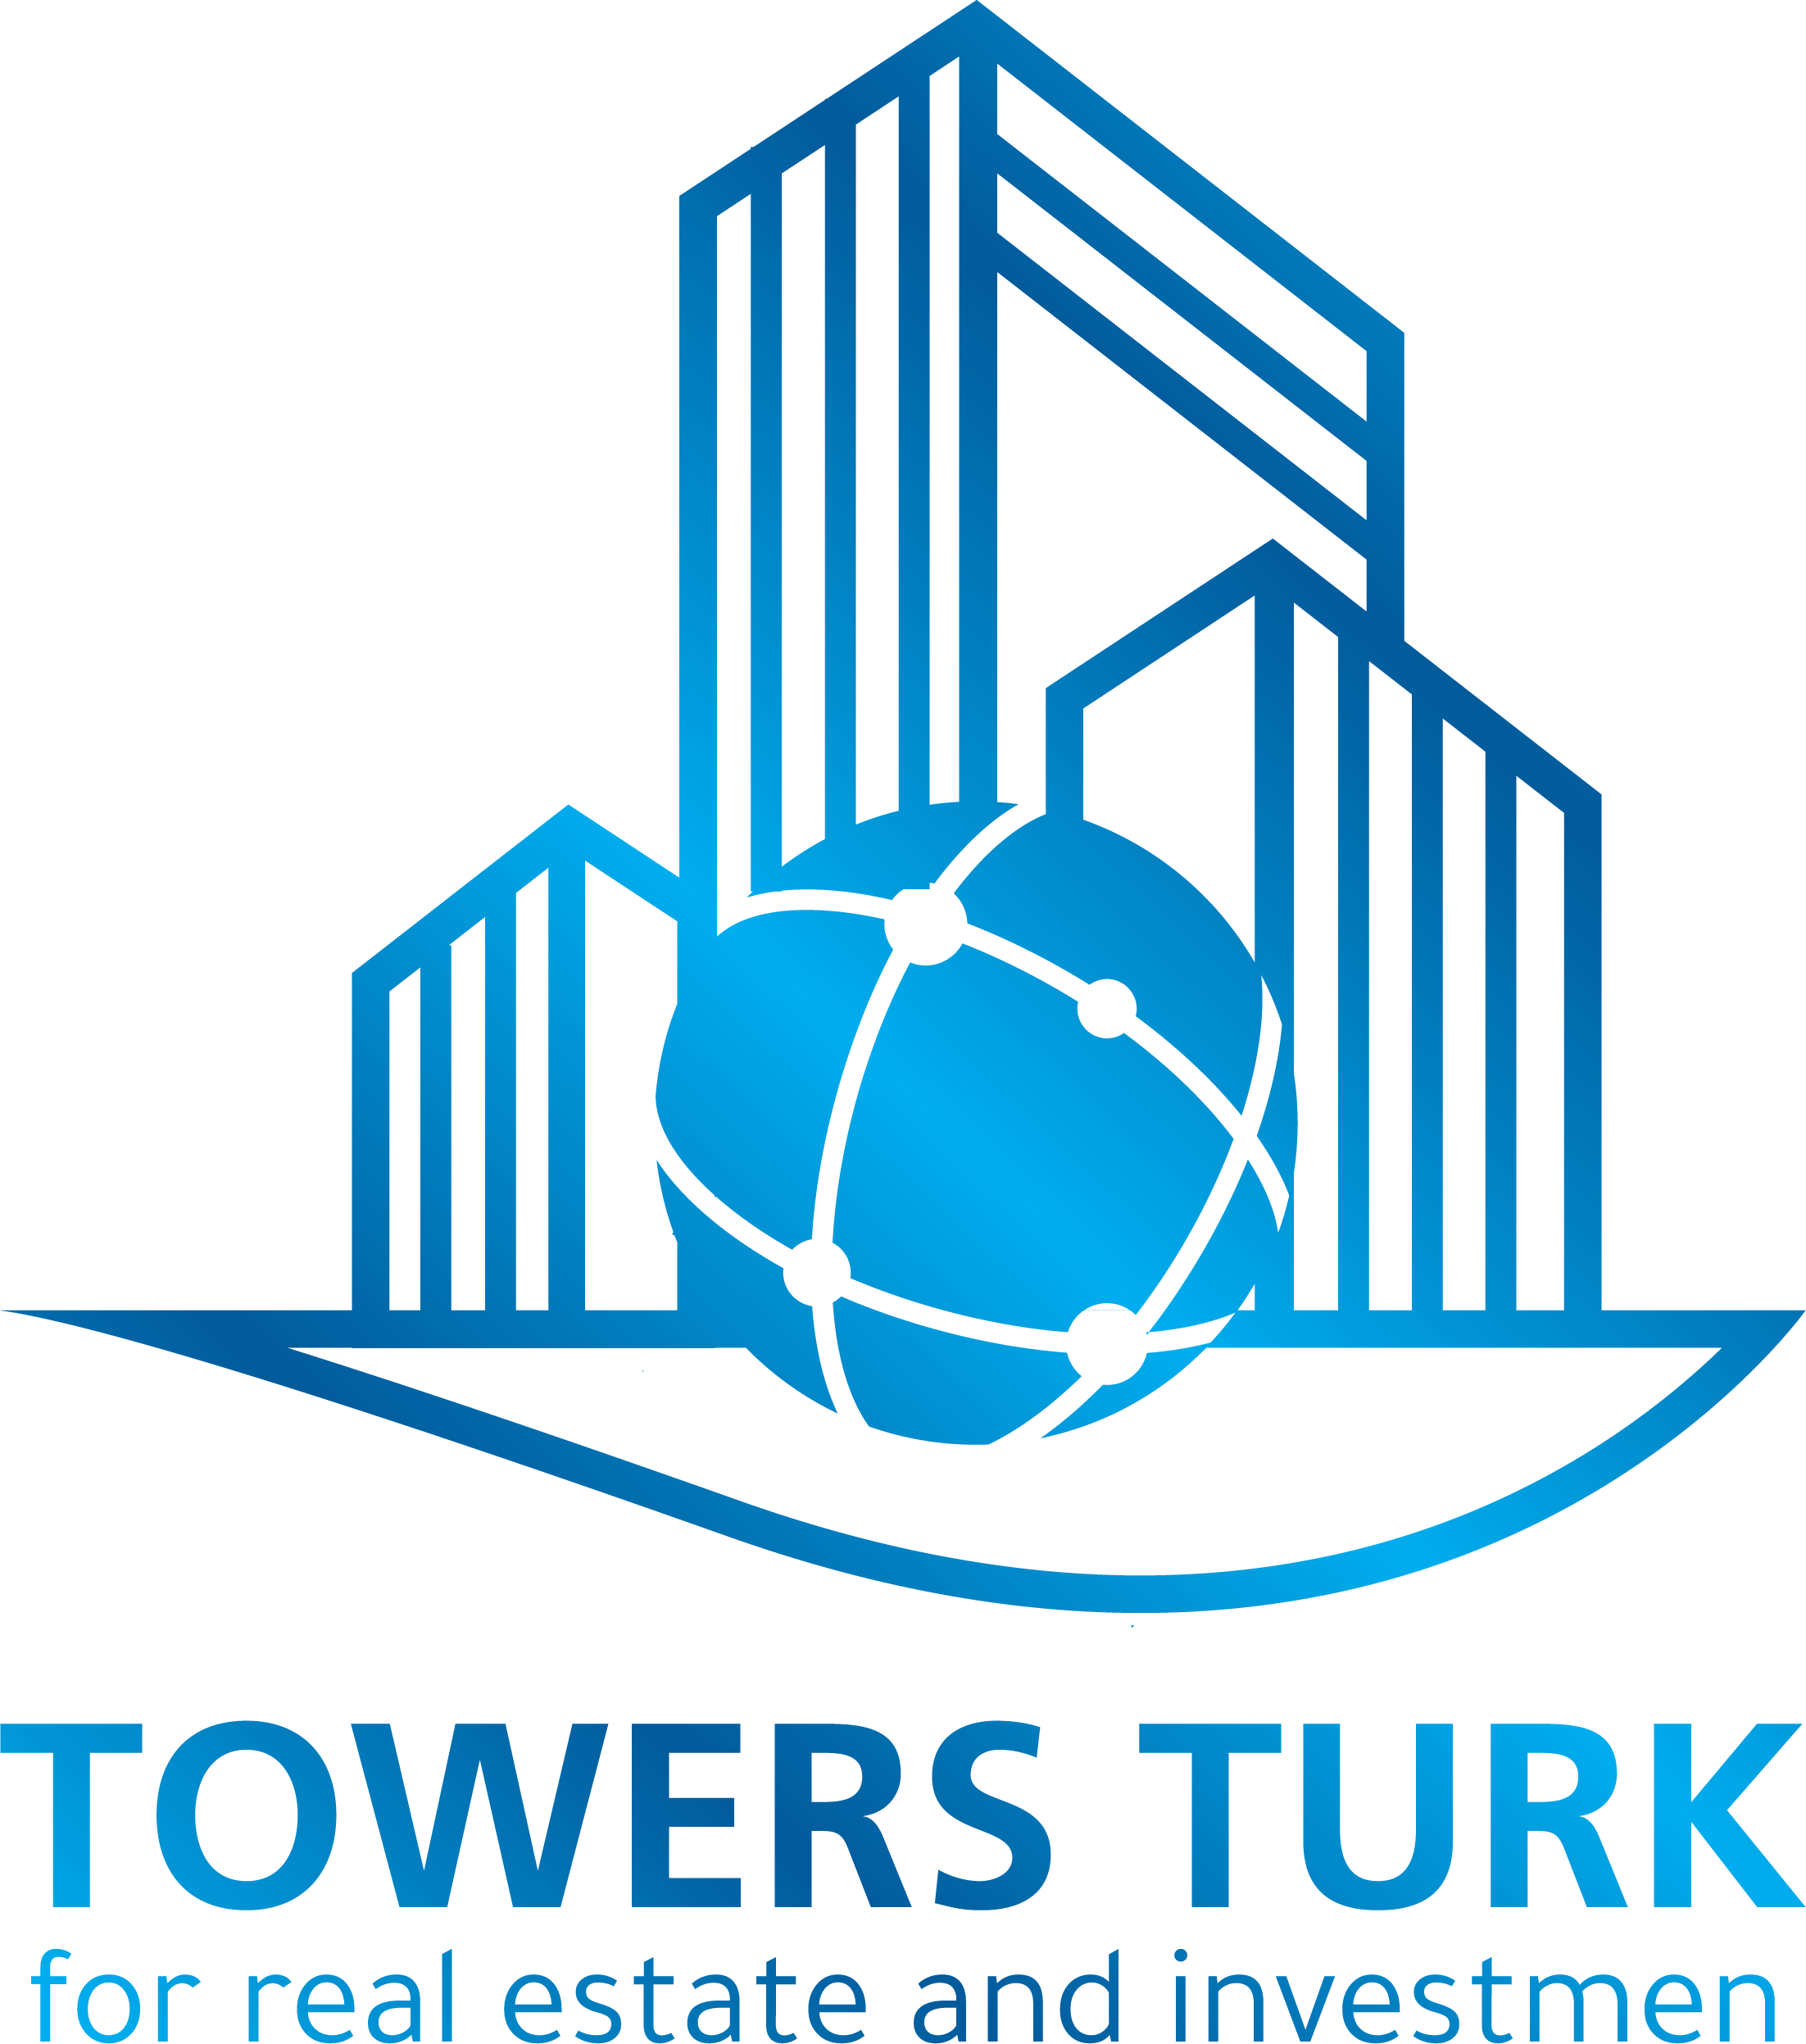 Towers TURK